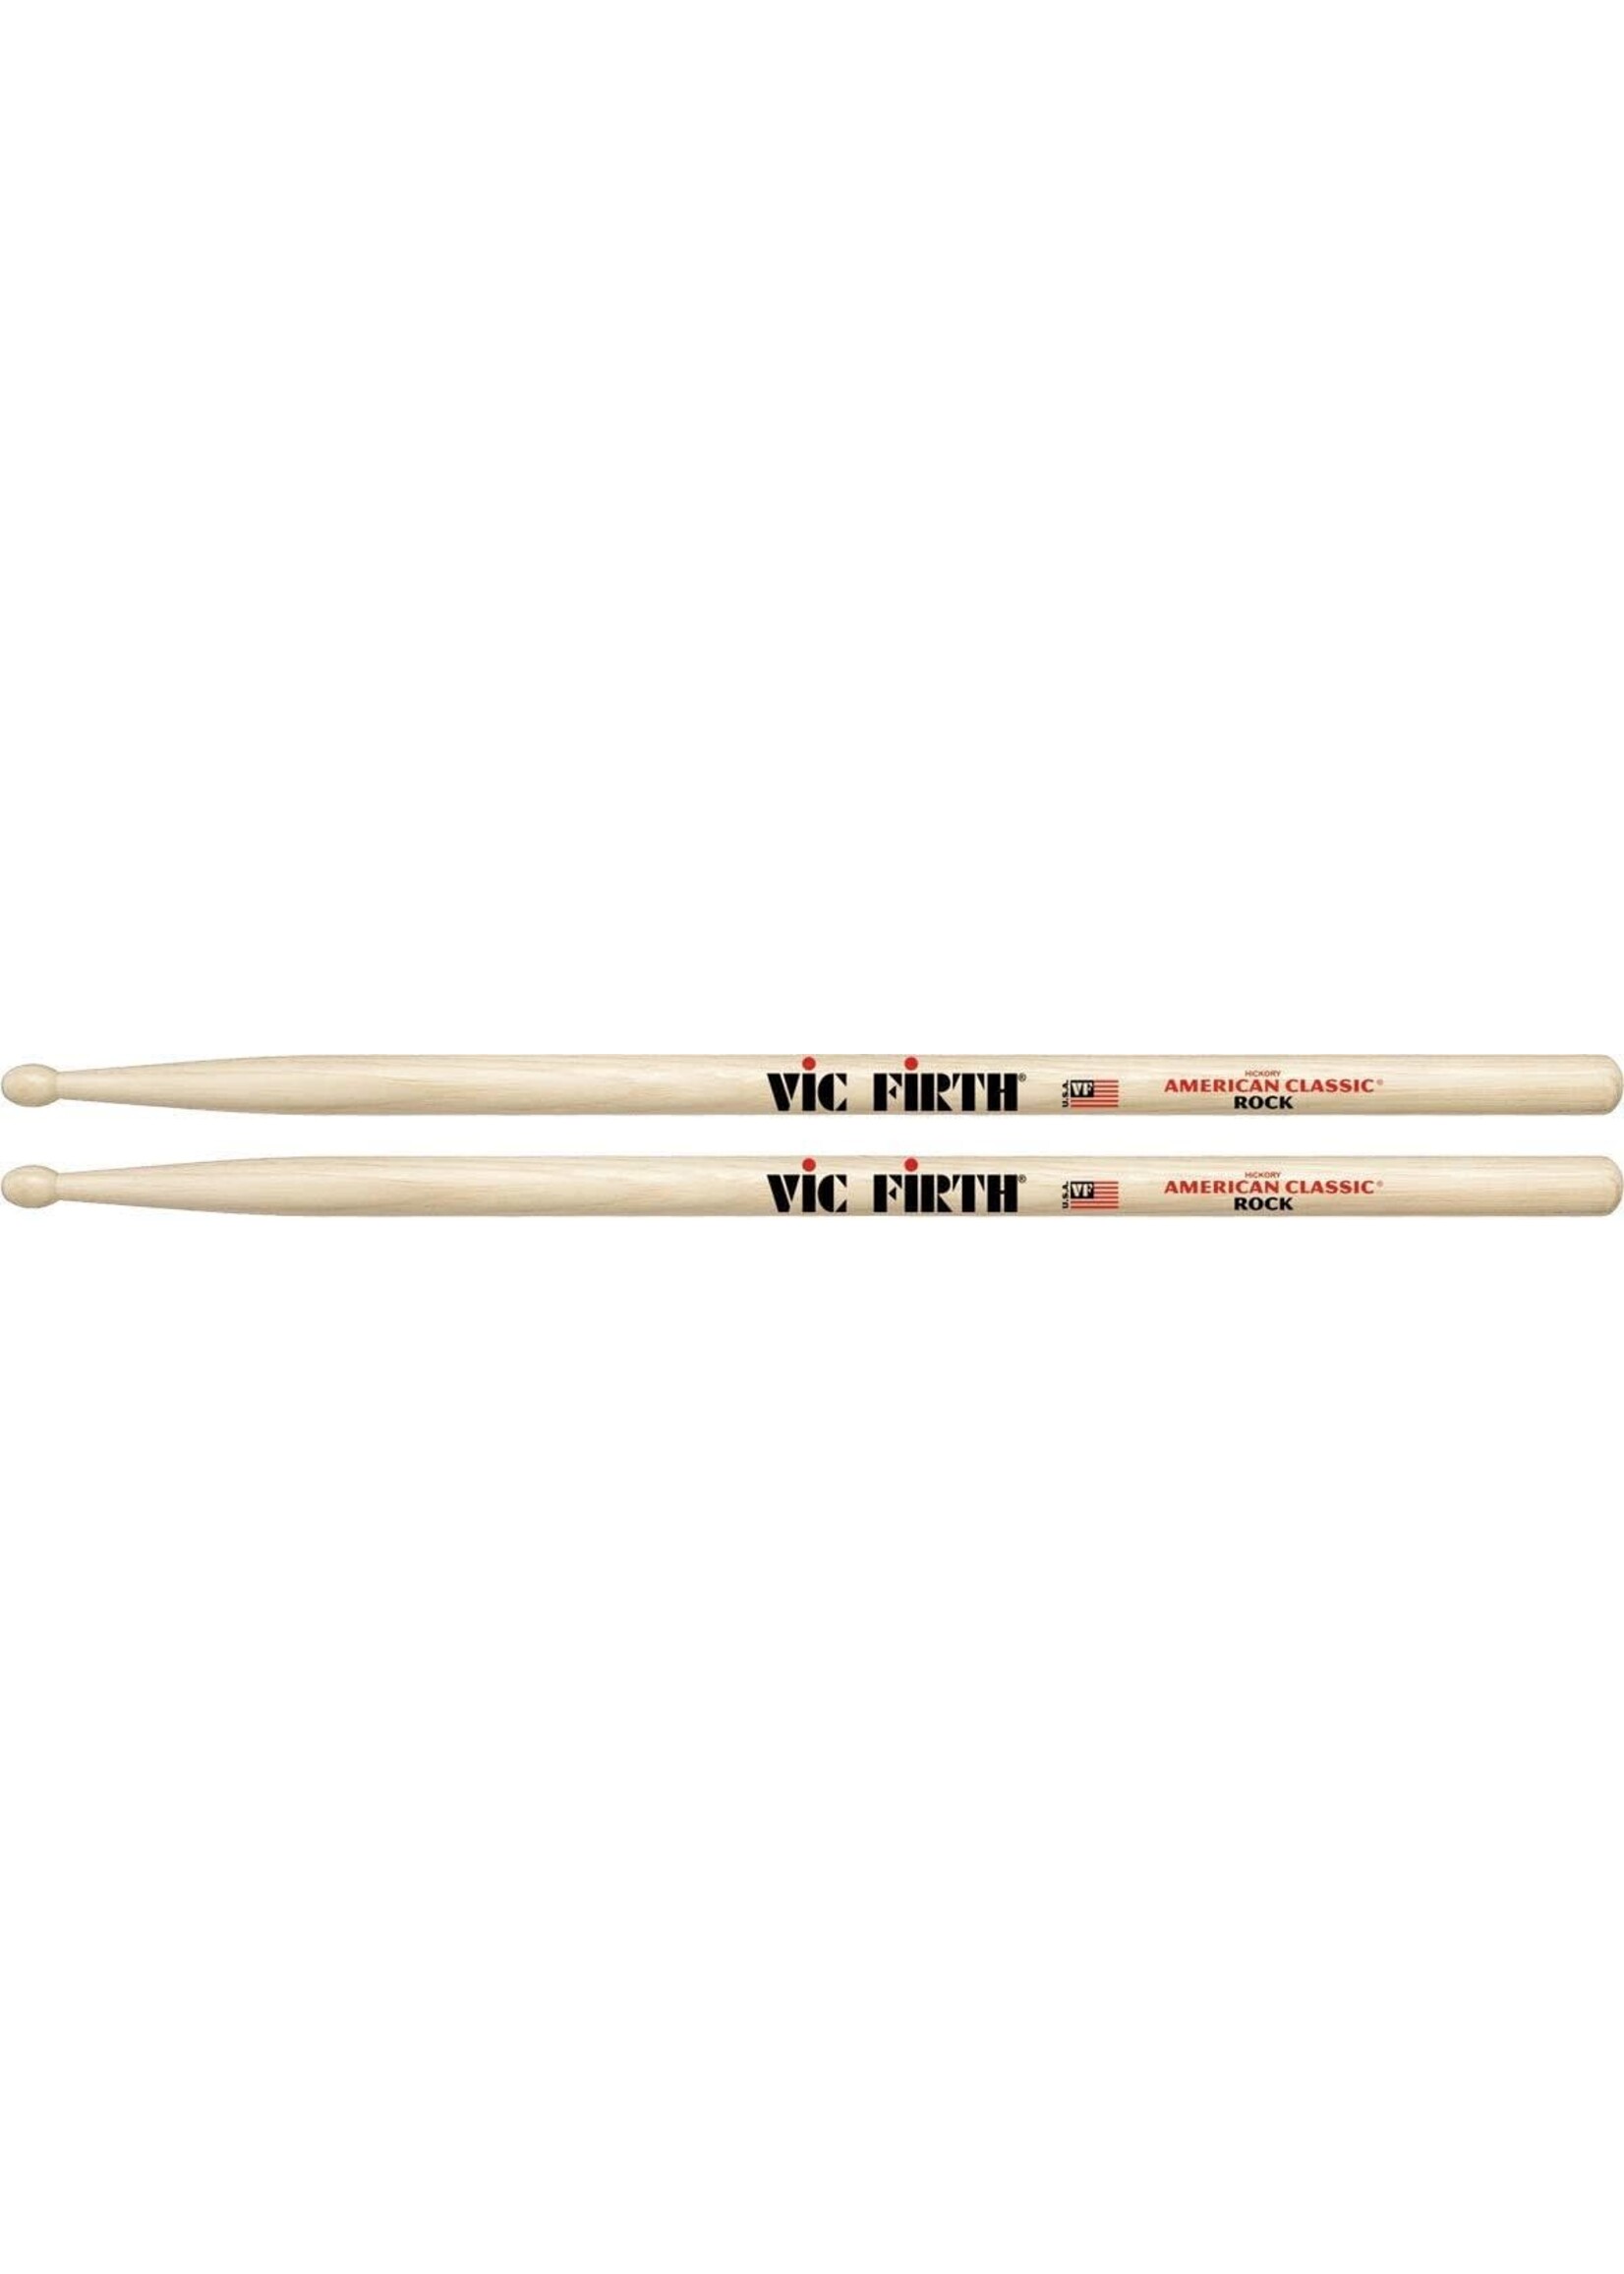 Vic Firth Vic Firth ROCK American Classic Drumsticks, Rock, Wood Tip